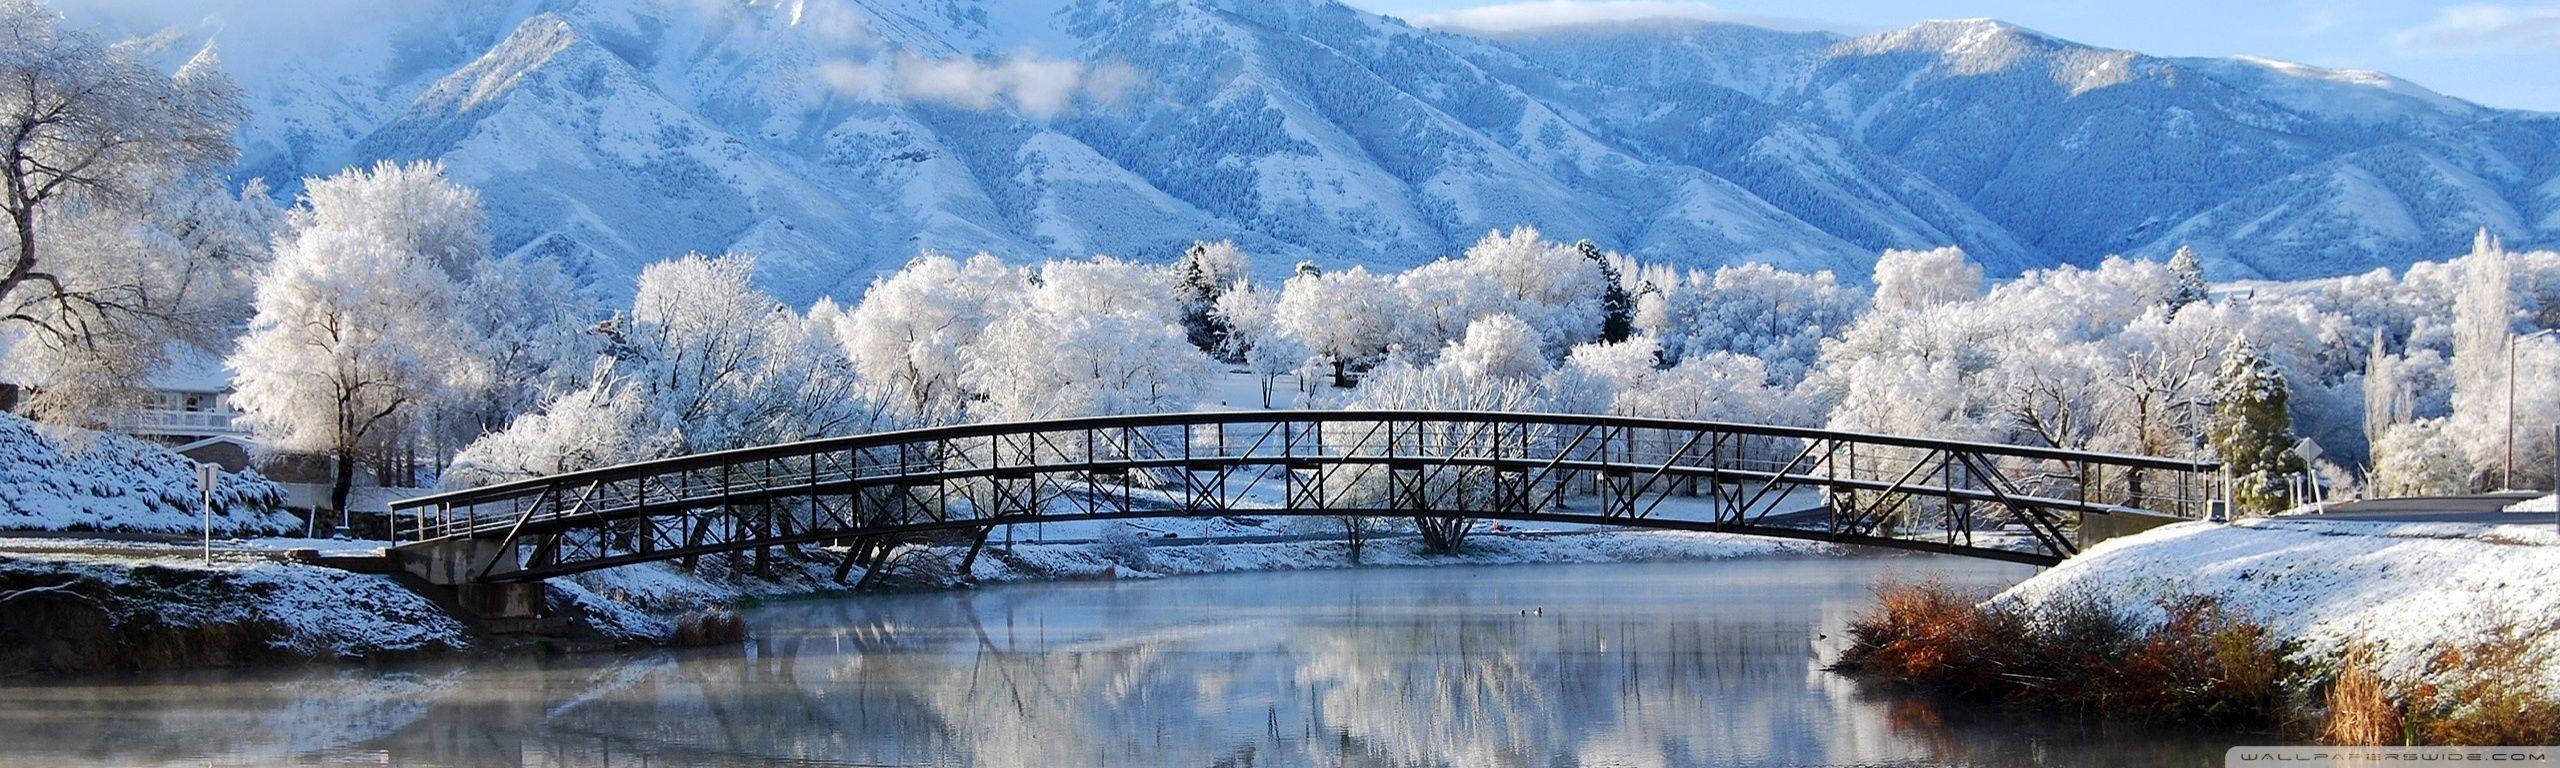 Winter Season Long Bridge Background